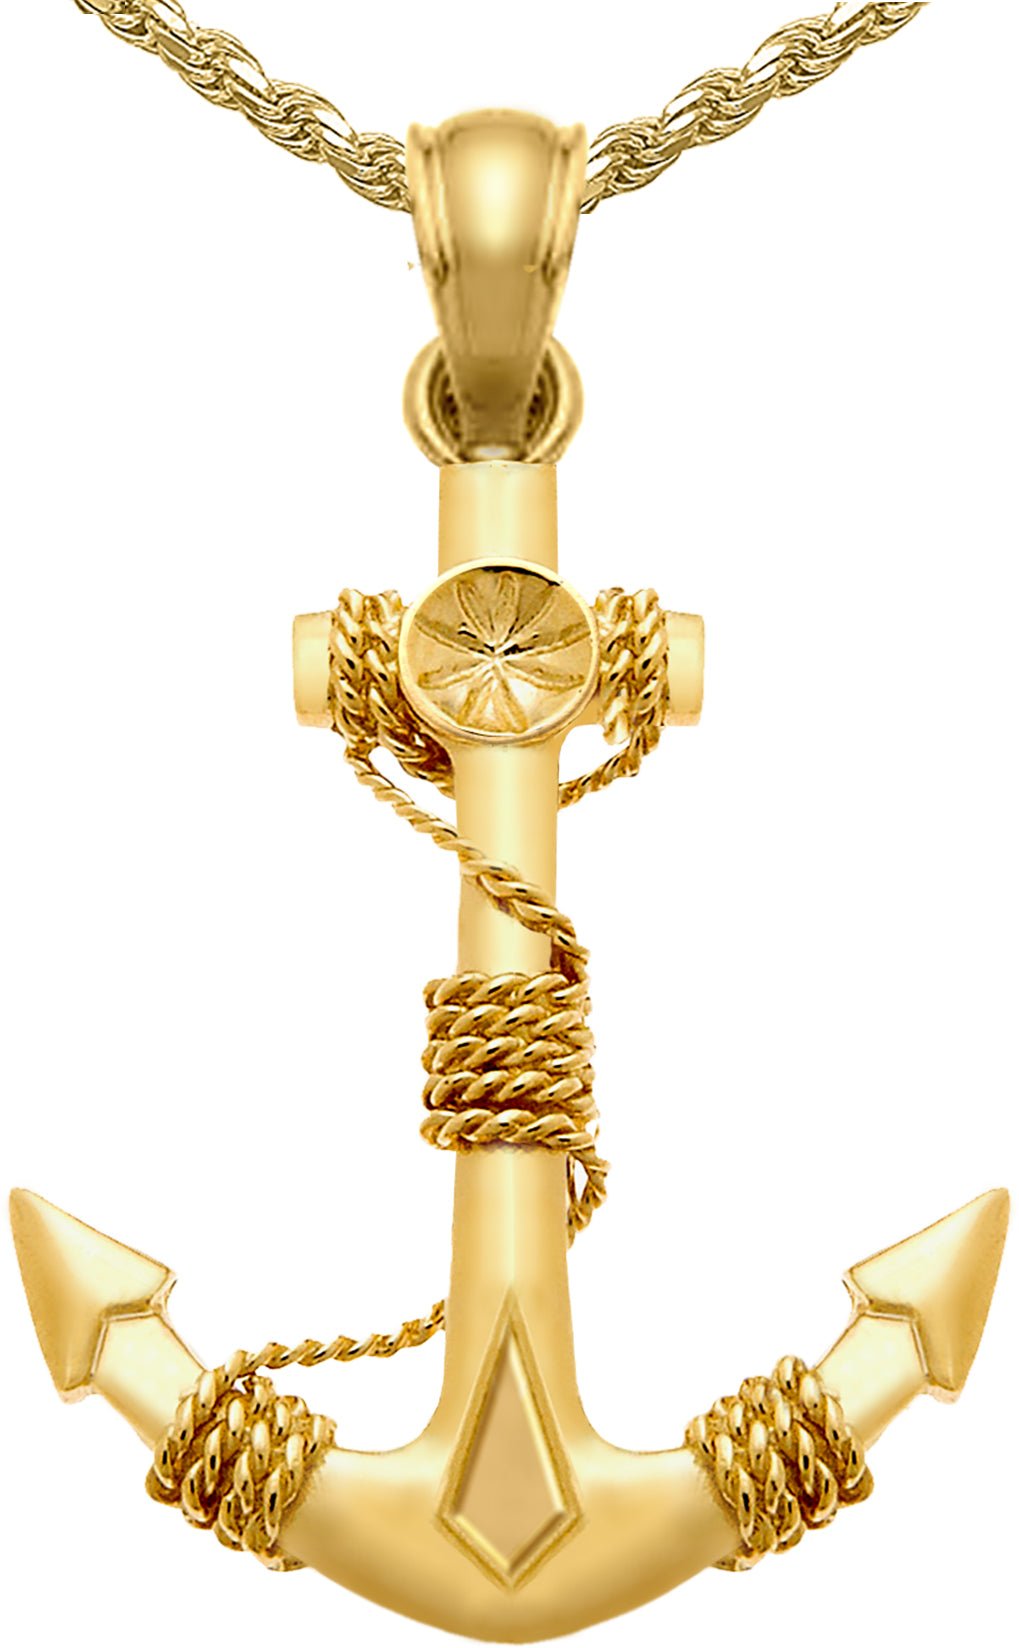 Men's Nautical Gold Anchor Chain Bracelet